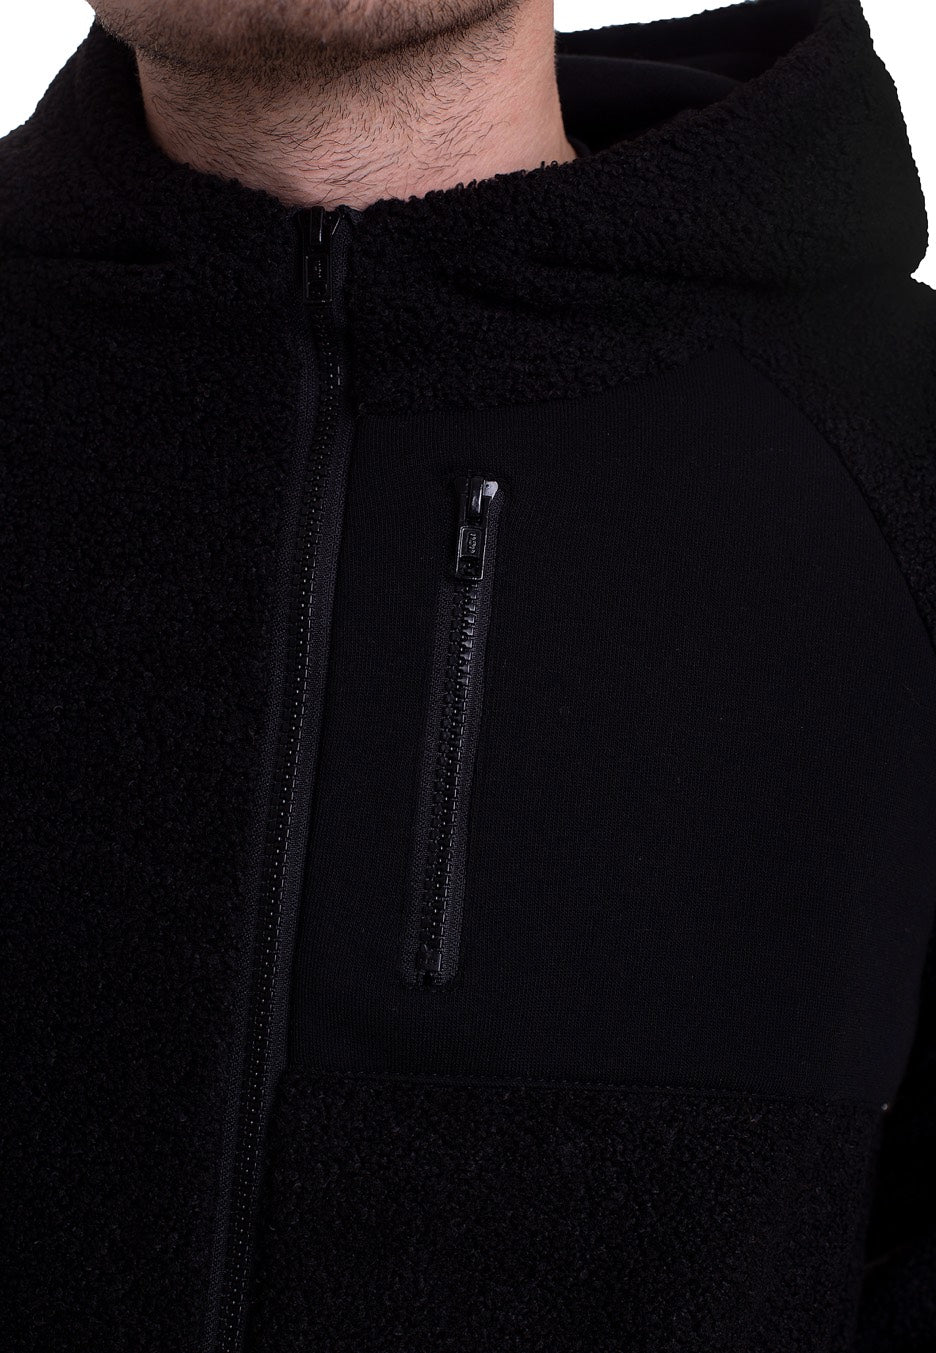 Urban Classics - Hooded Sherpa Zip Black - Jacket